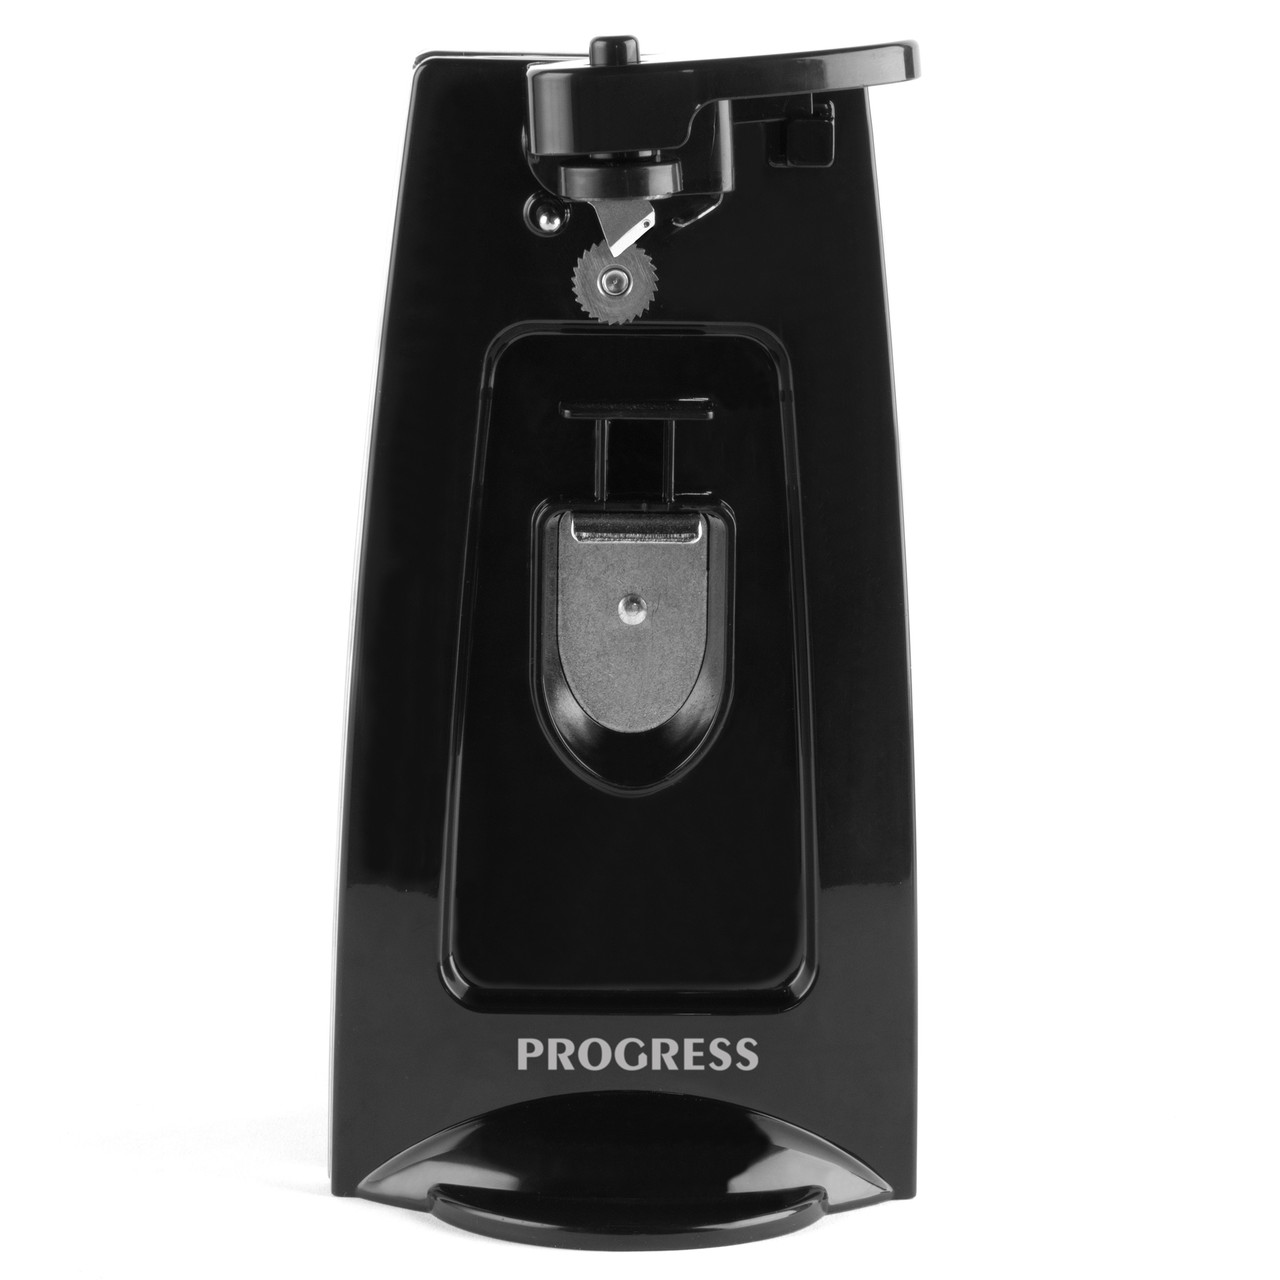 Niovtt 3 in 1 Retractable Magnetic Bottle Opener Multifunctional Kitchen Gadget (Black), Size: 1 Pack